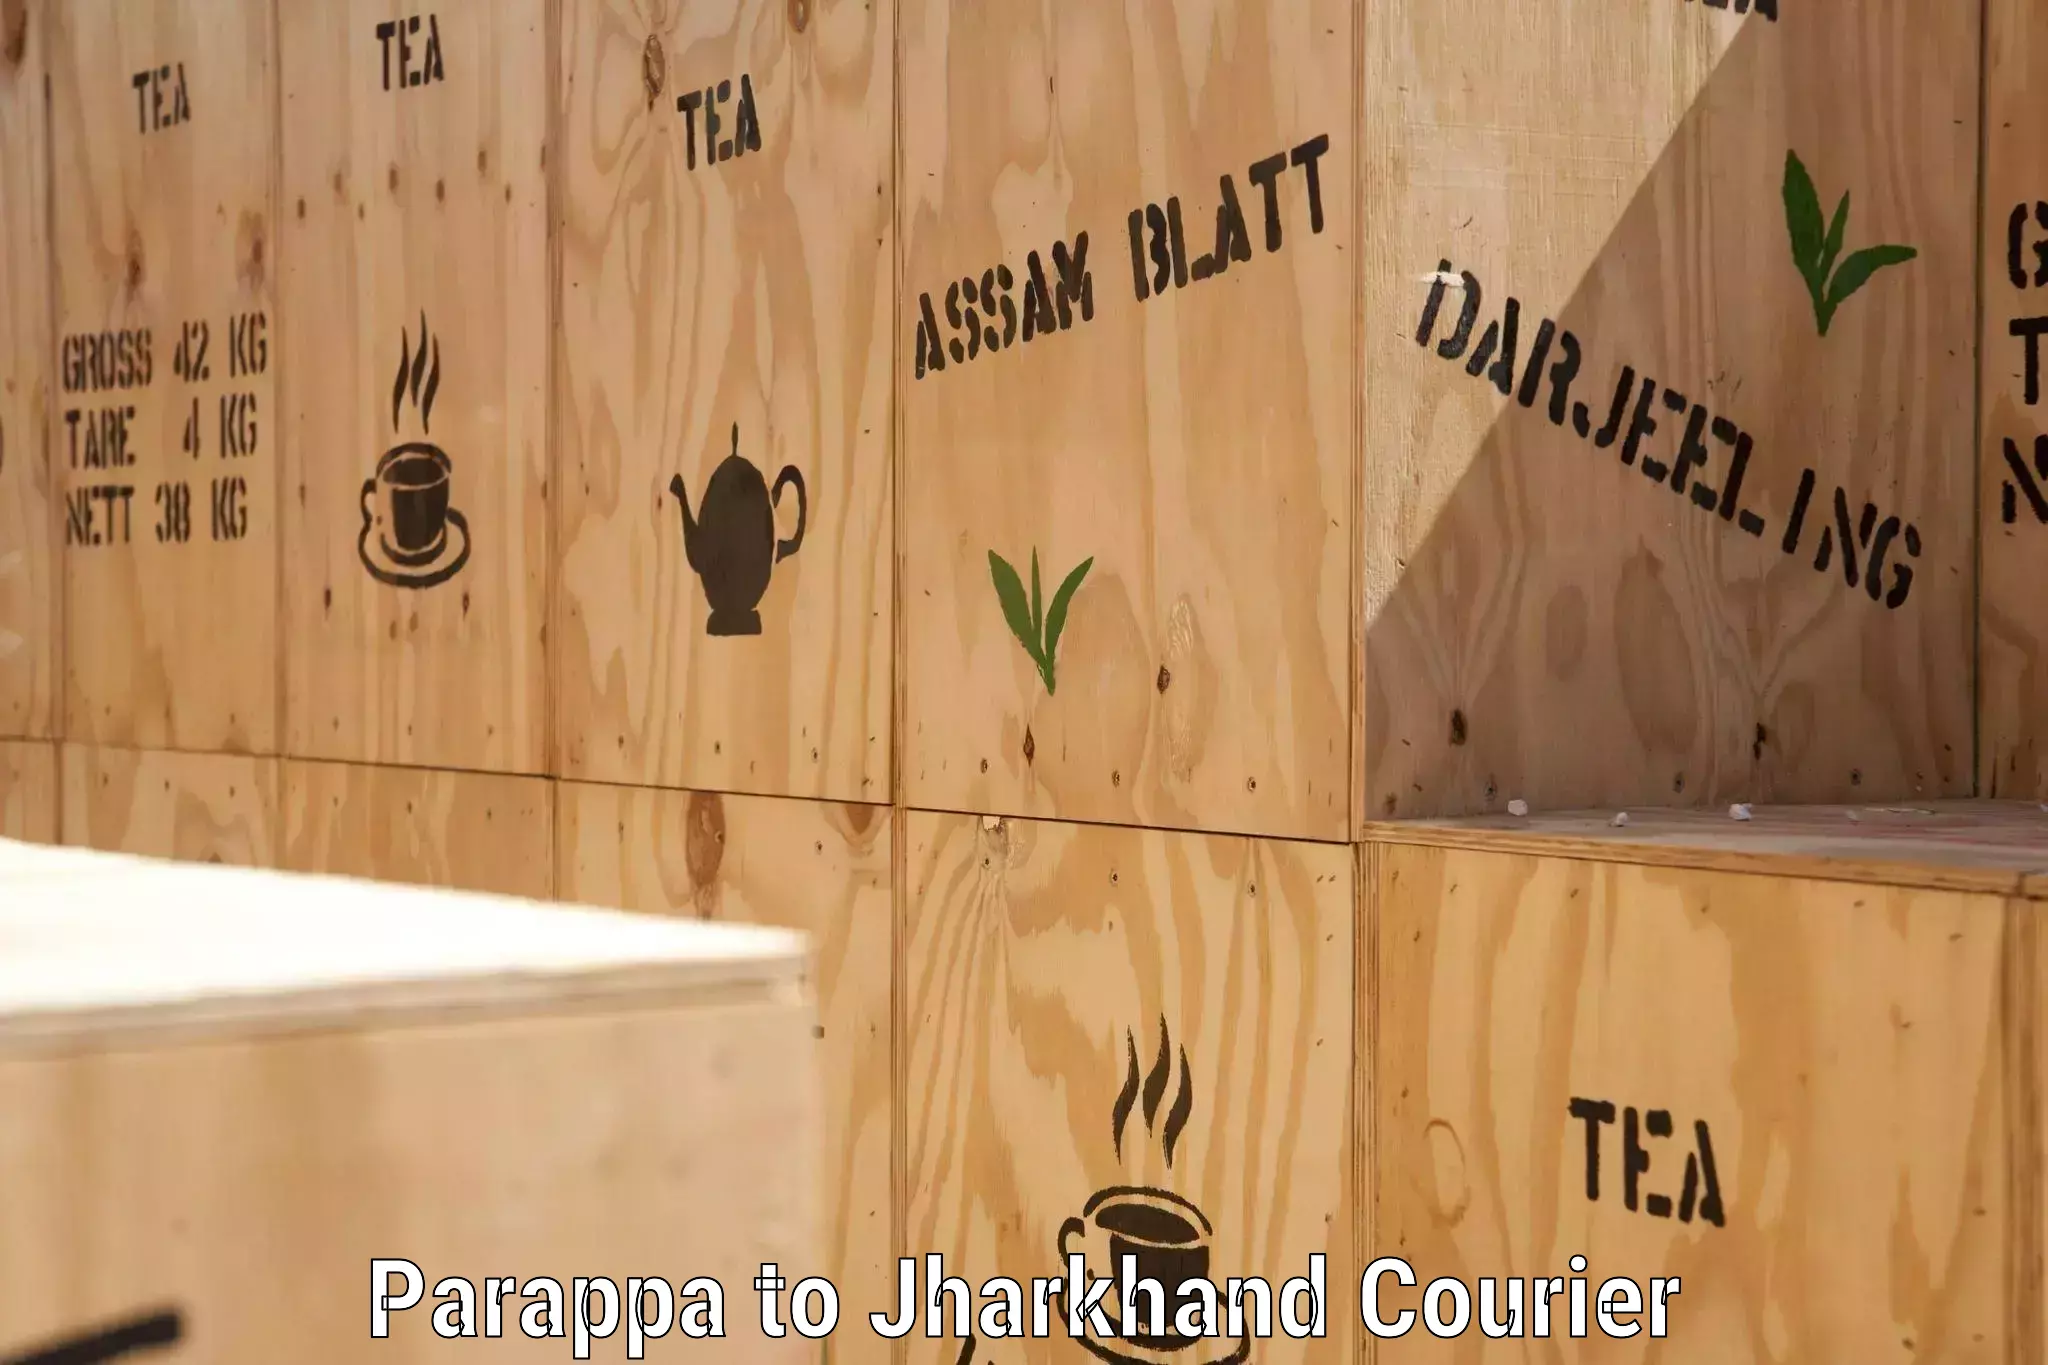 High-capacity courier solutions Parappa to Daltonganj